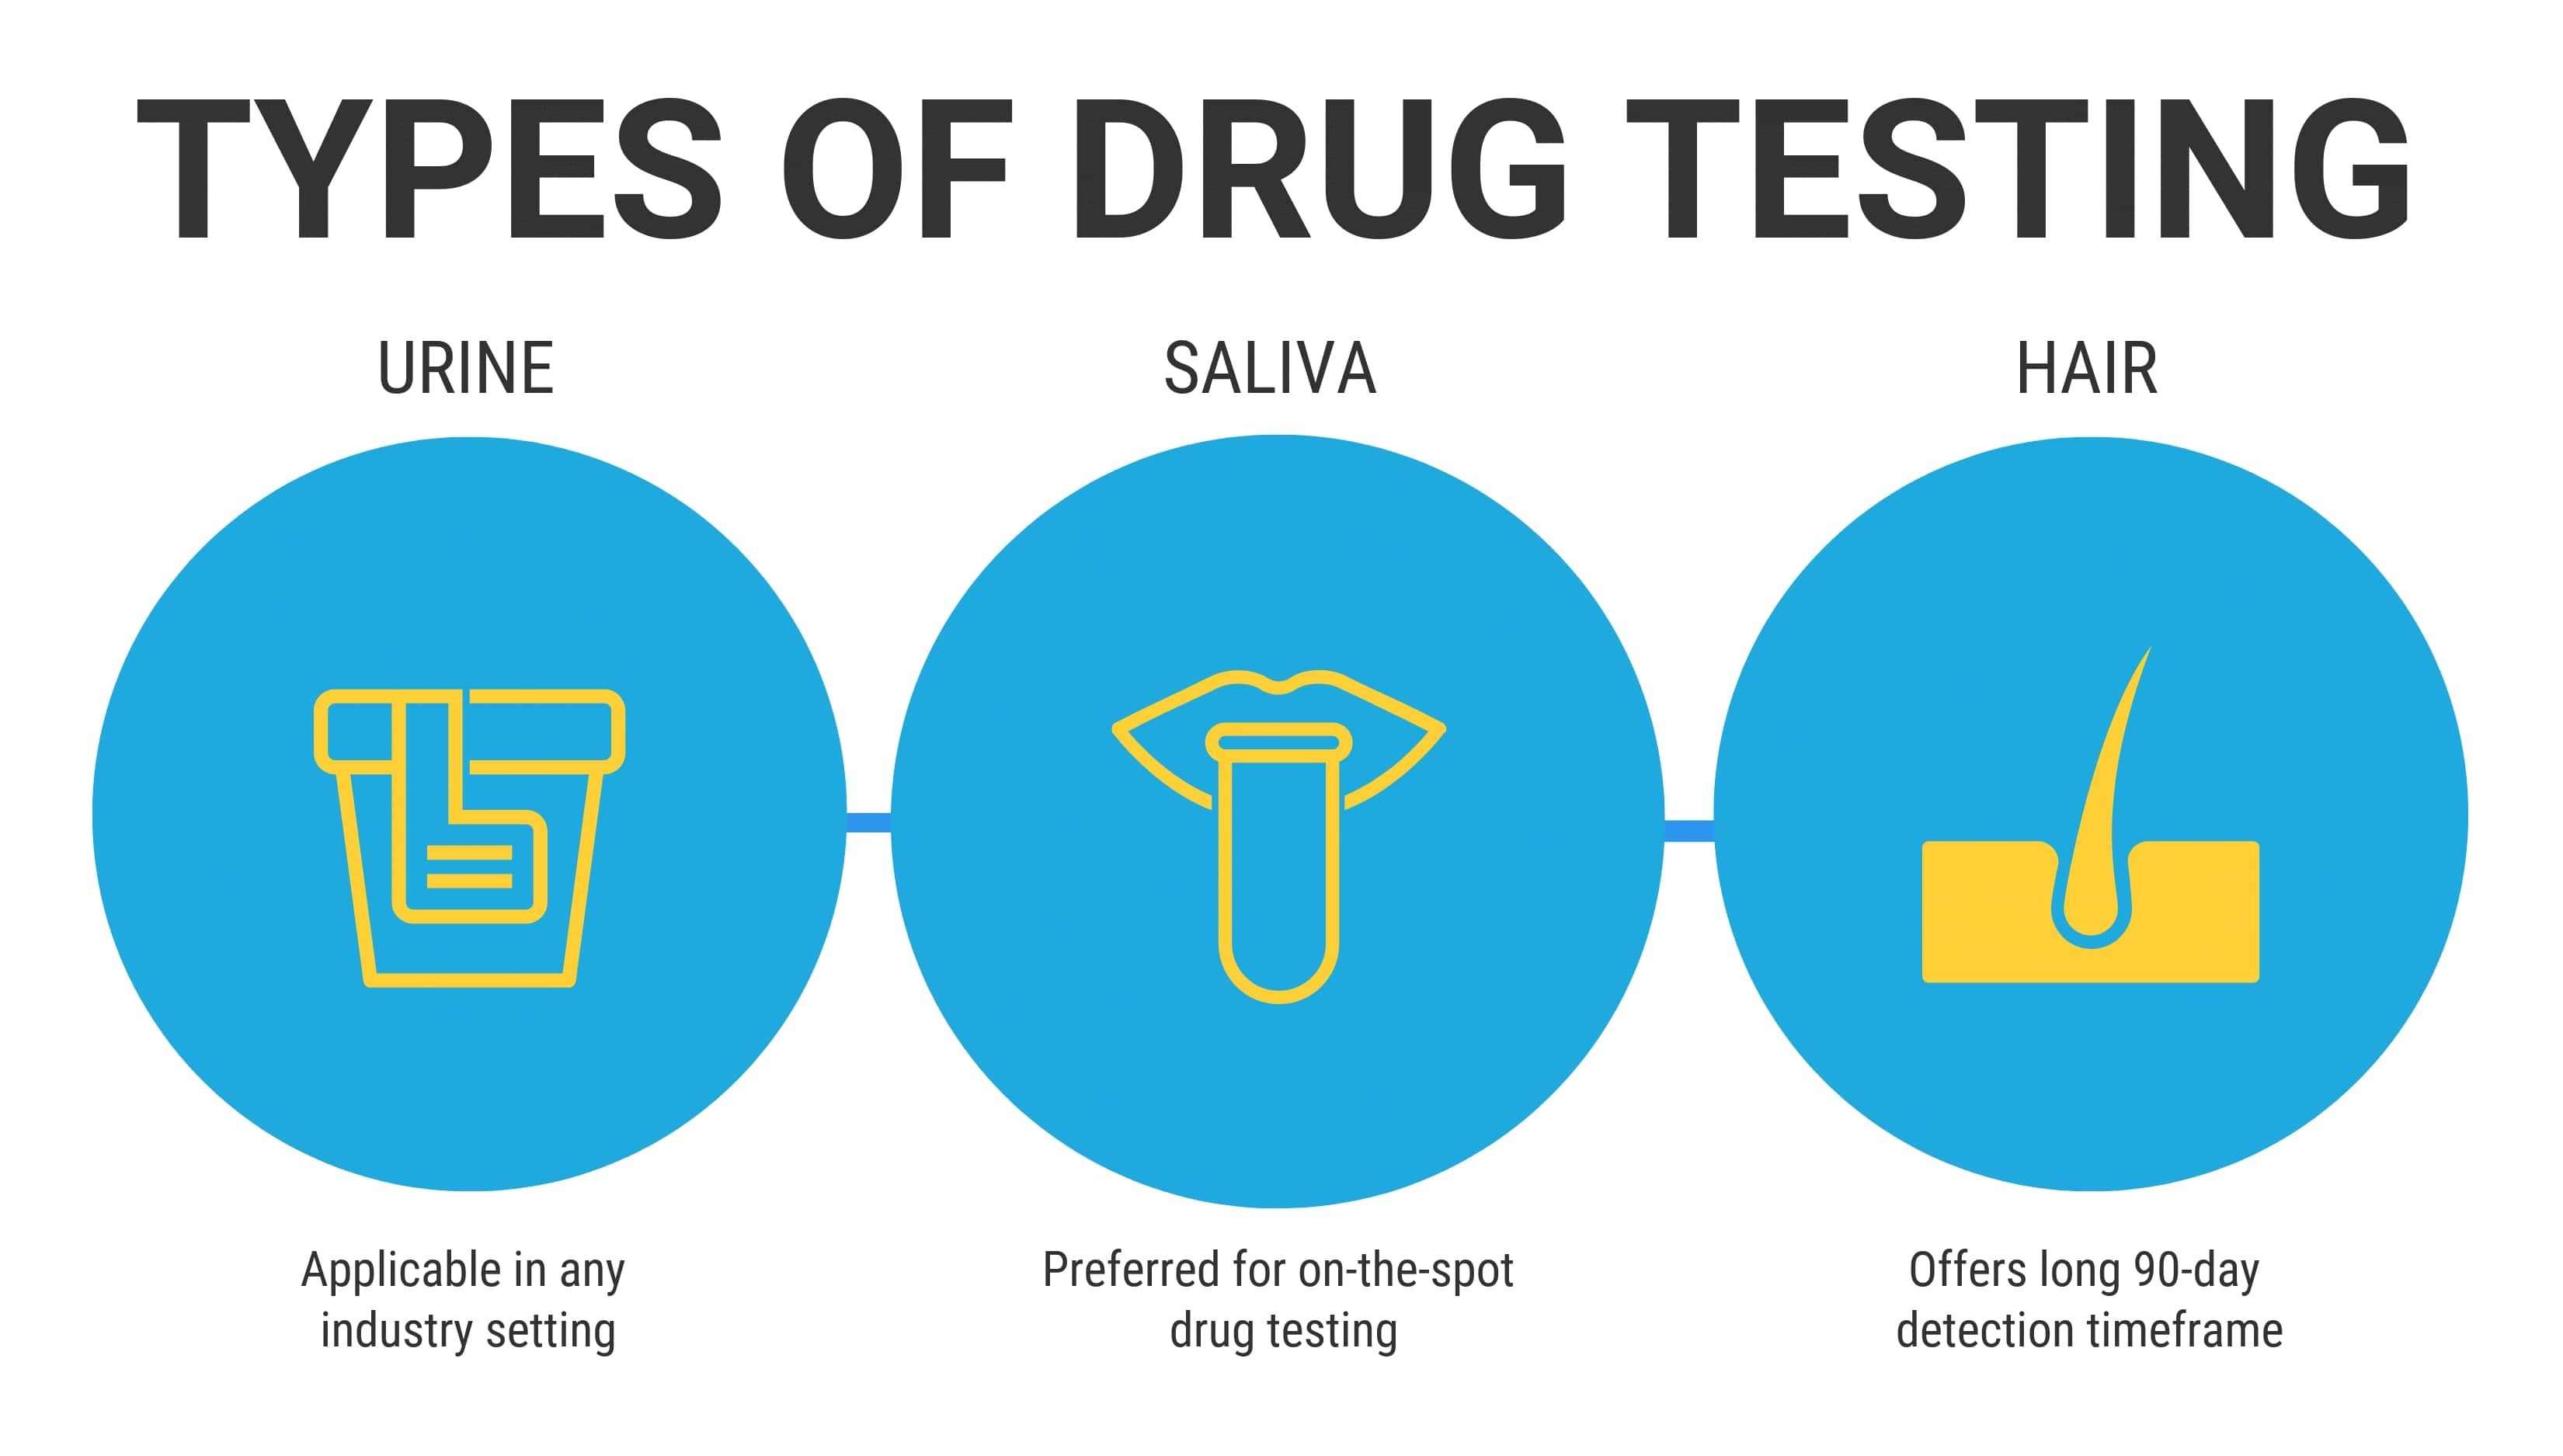 Drug Testing Hair Vs. Urine | The Benefits of Drug Testing Options